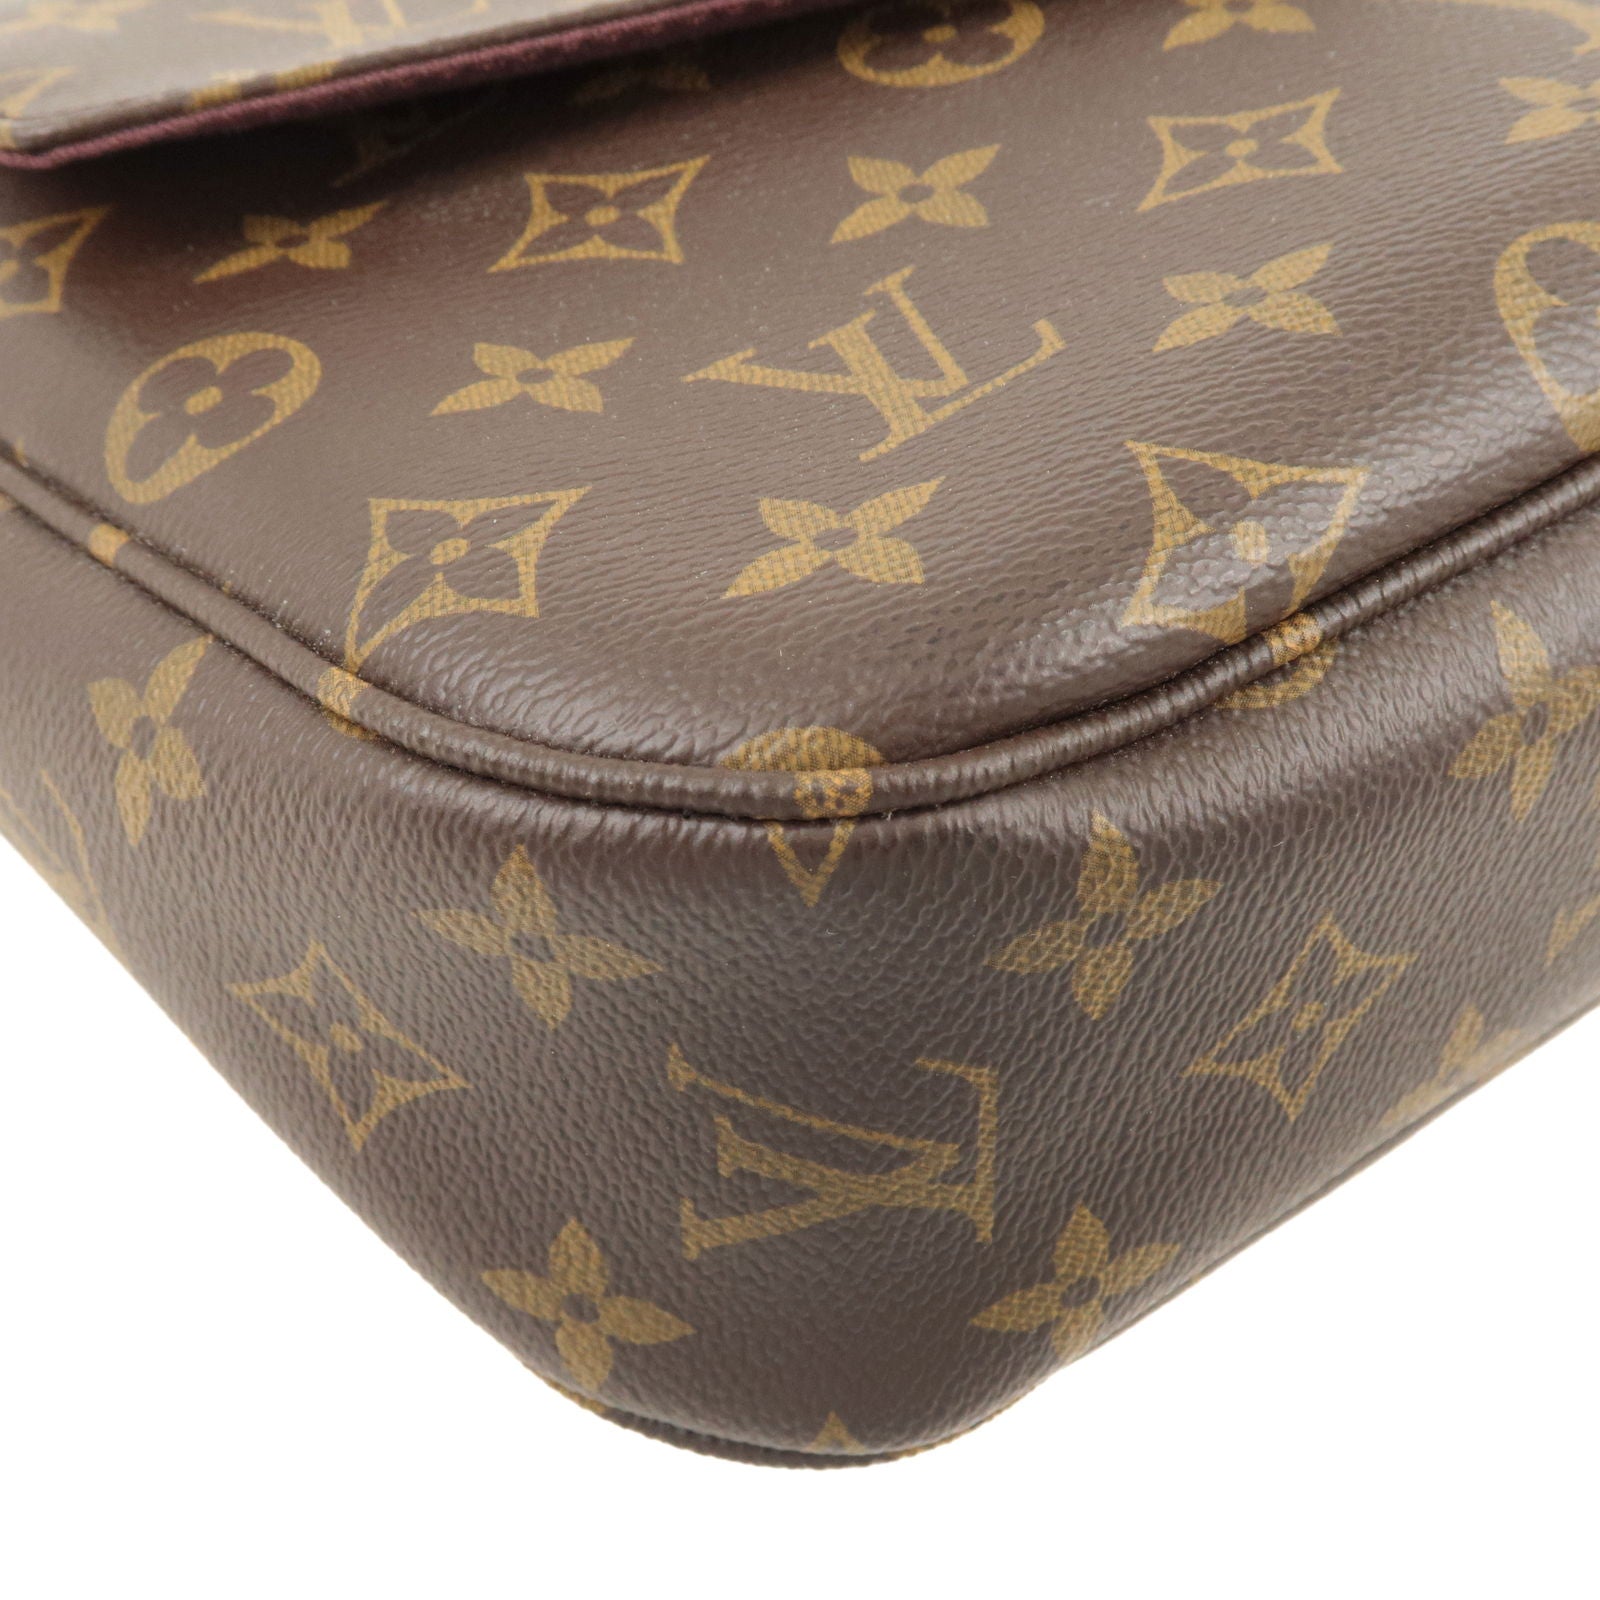 Selena Gomez Got Her Hands on the New Louis Vuitton It Bag